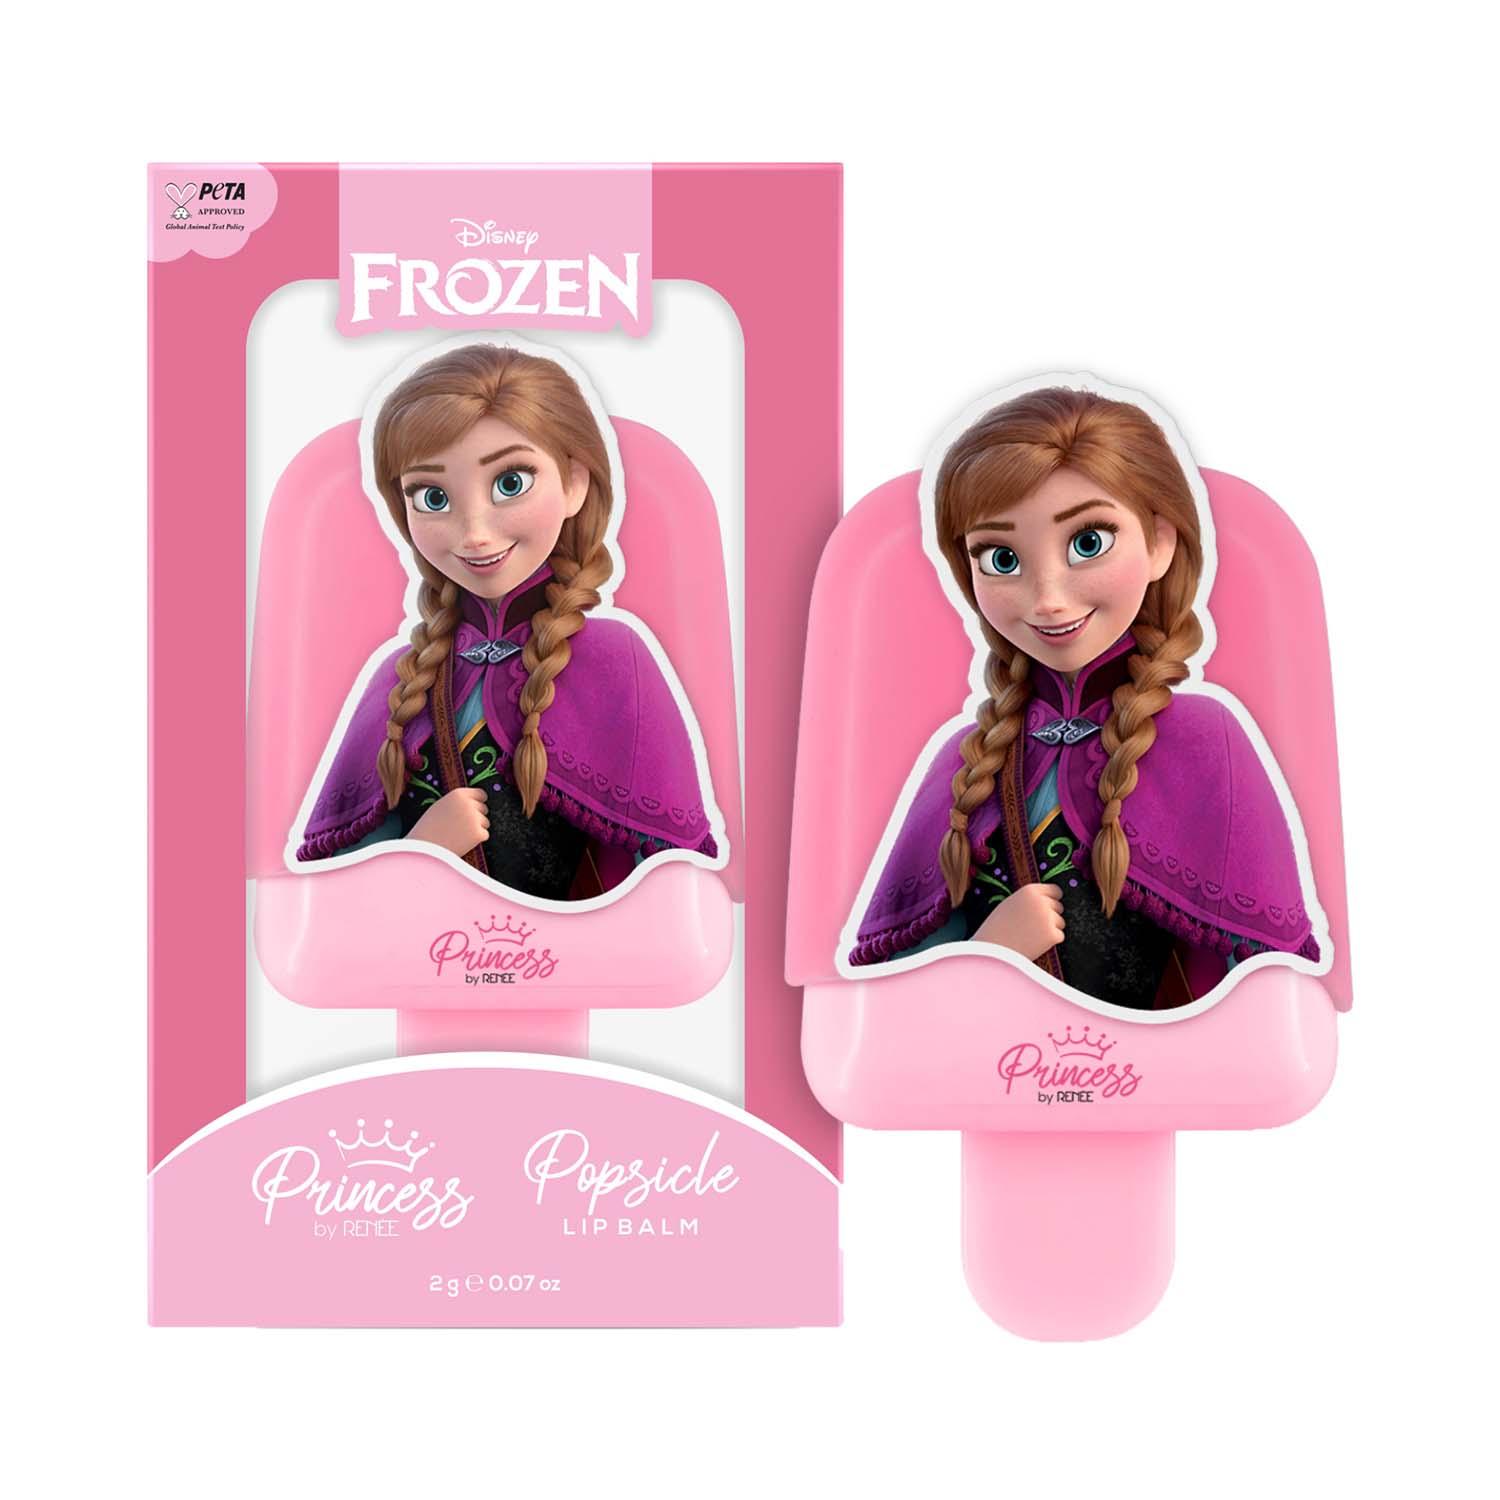 RENEE | Disney Frozen Princess By RENEE Popsicle Lip Balm - Anna (2 g)